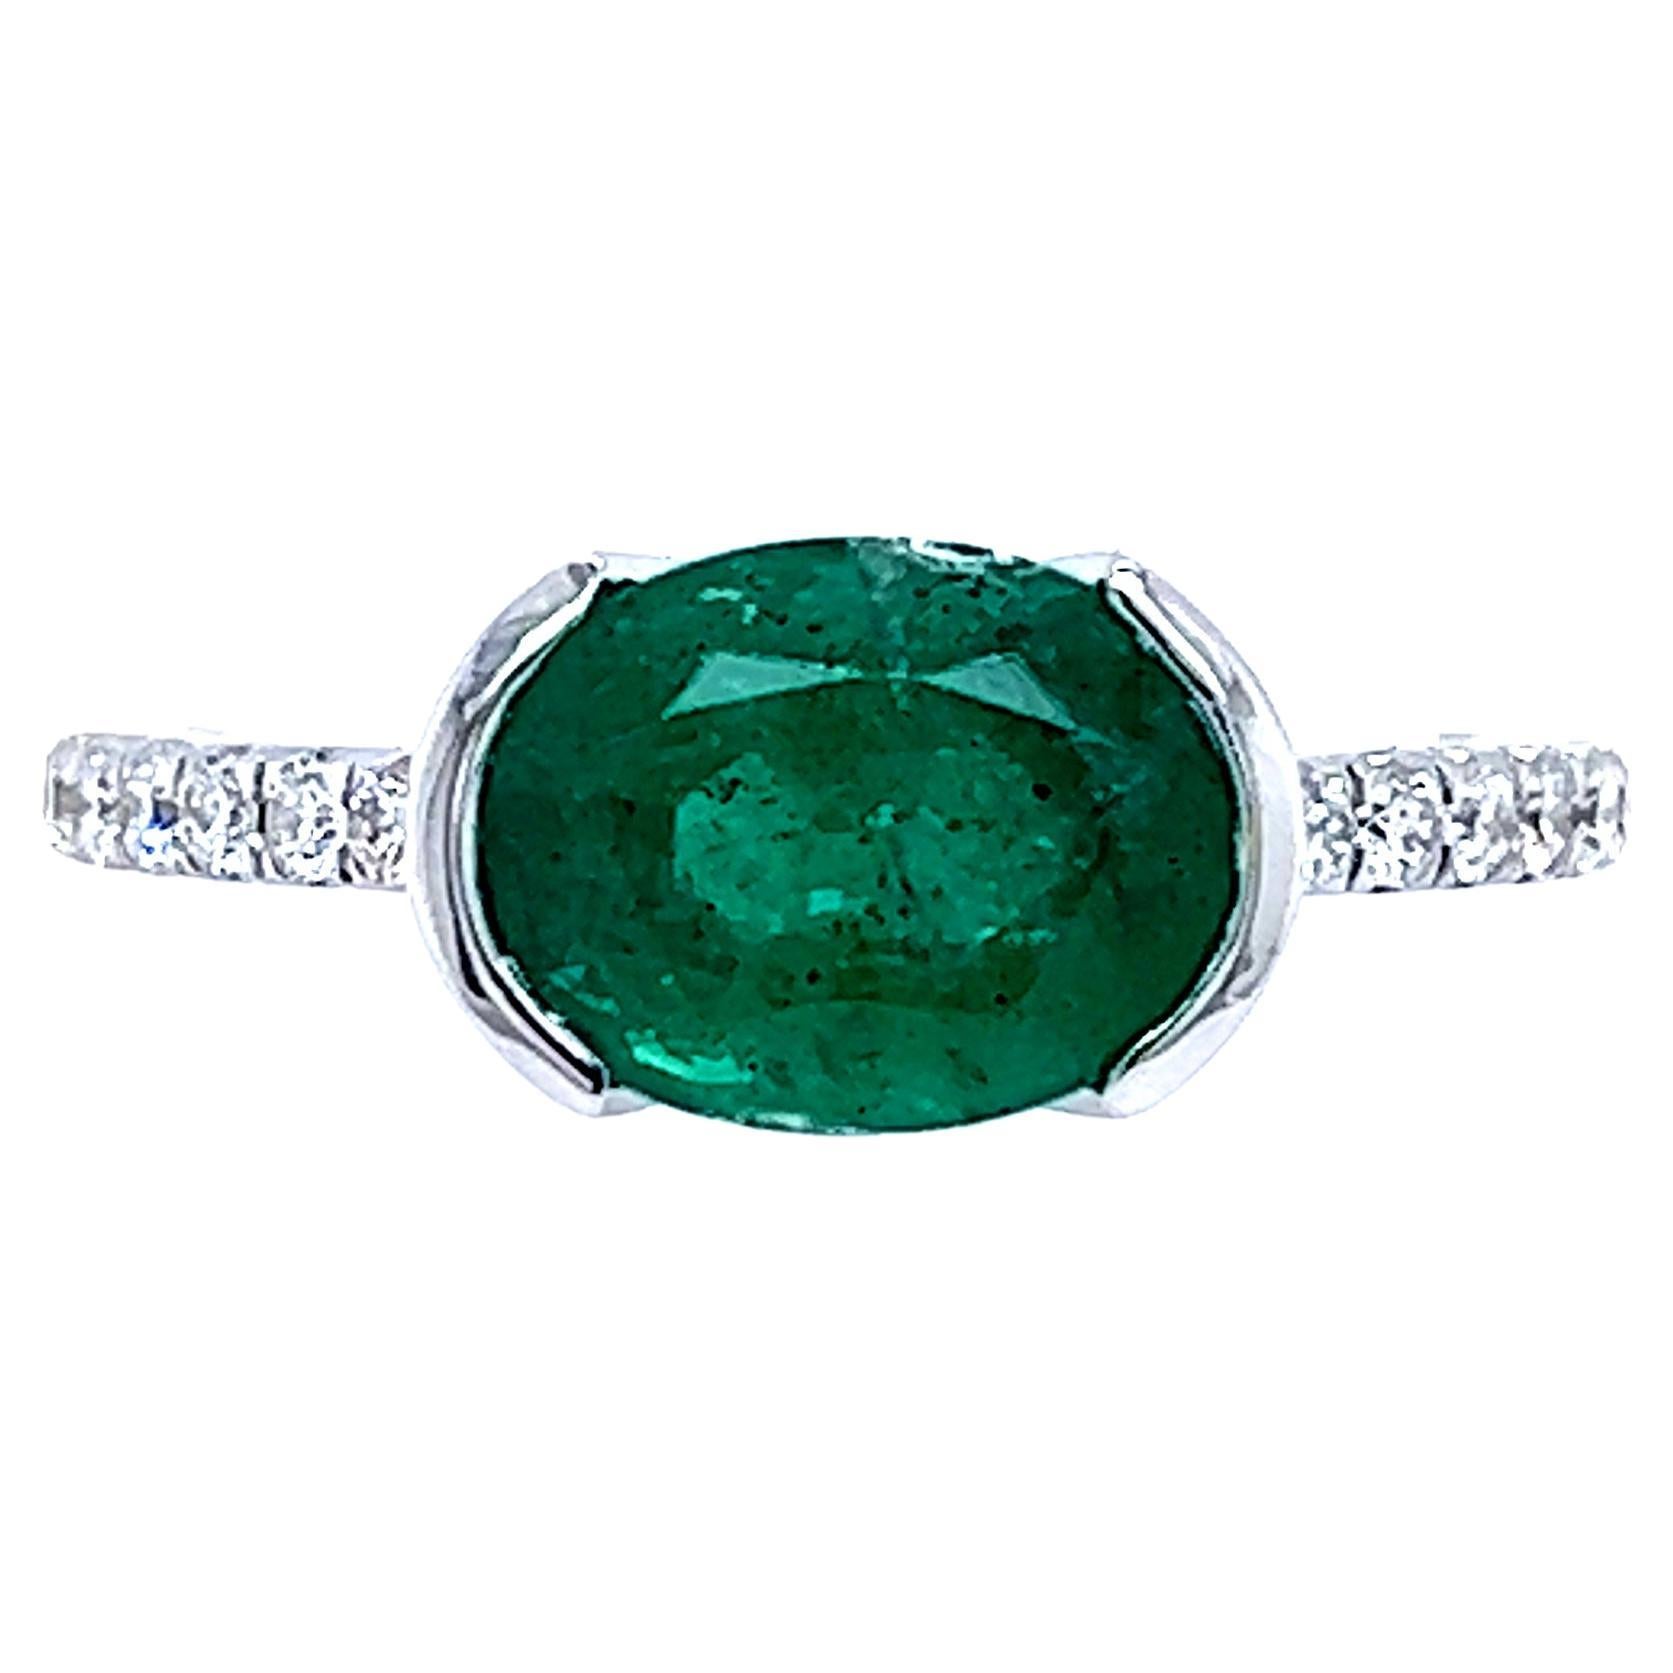 Natural Emerald Diamond Ring 6.5 14k W Gold 2.33 TCW Certified